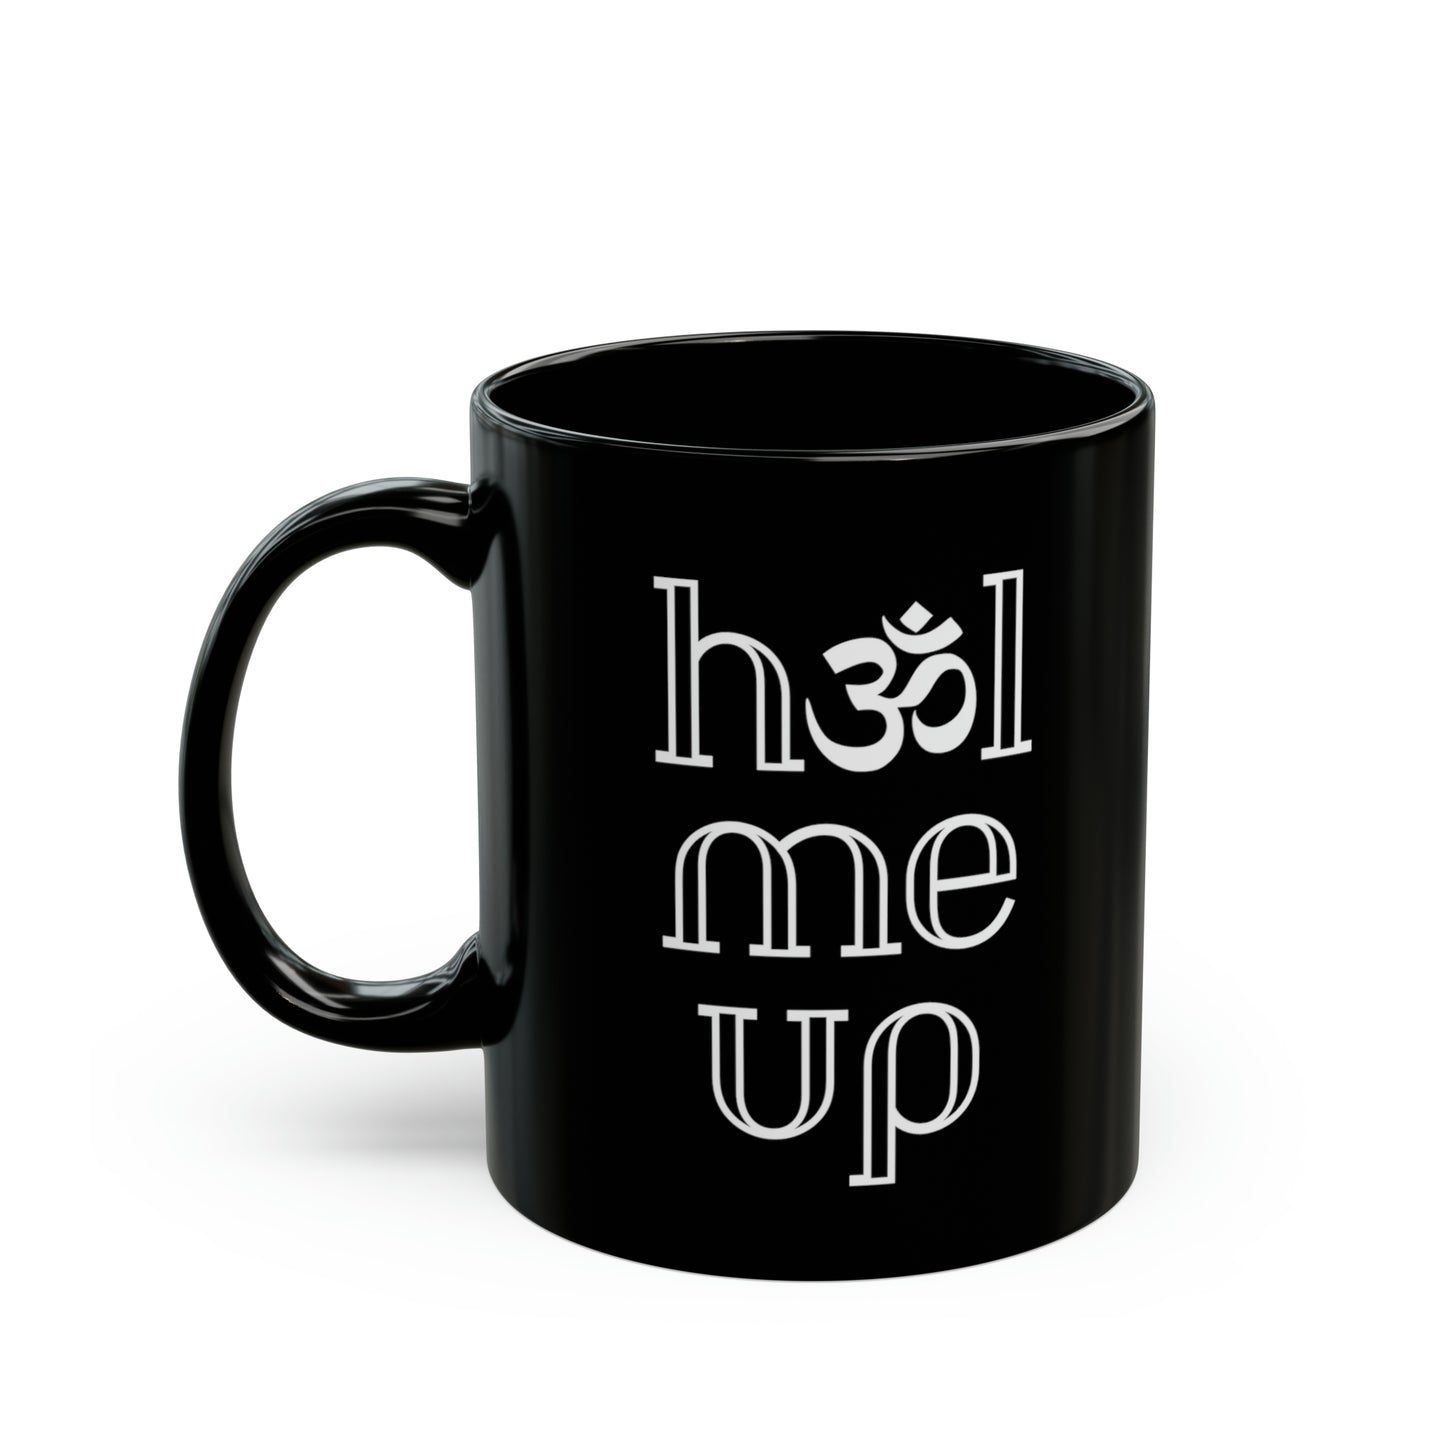 Heal me up Cup